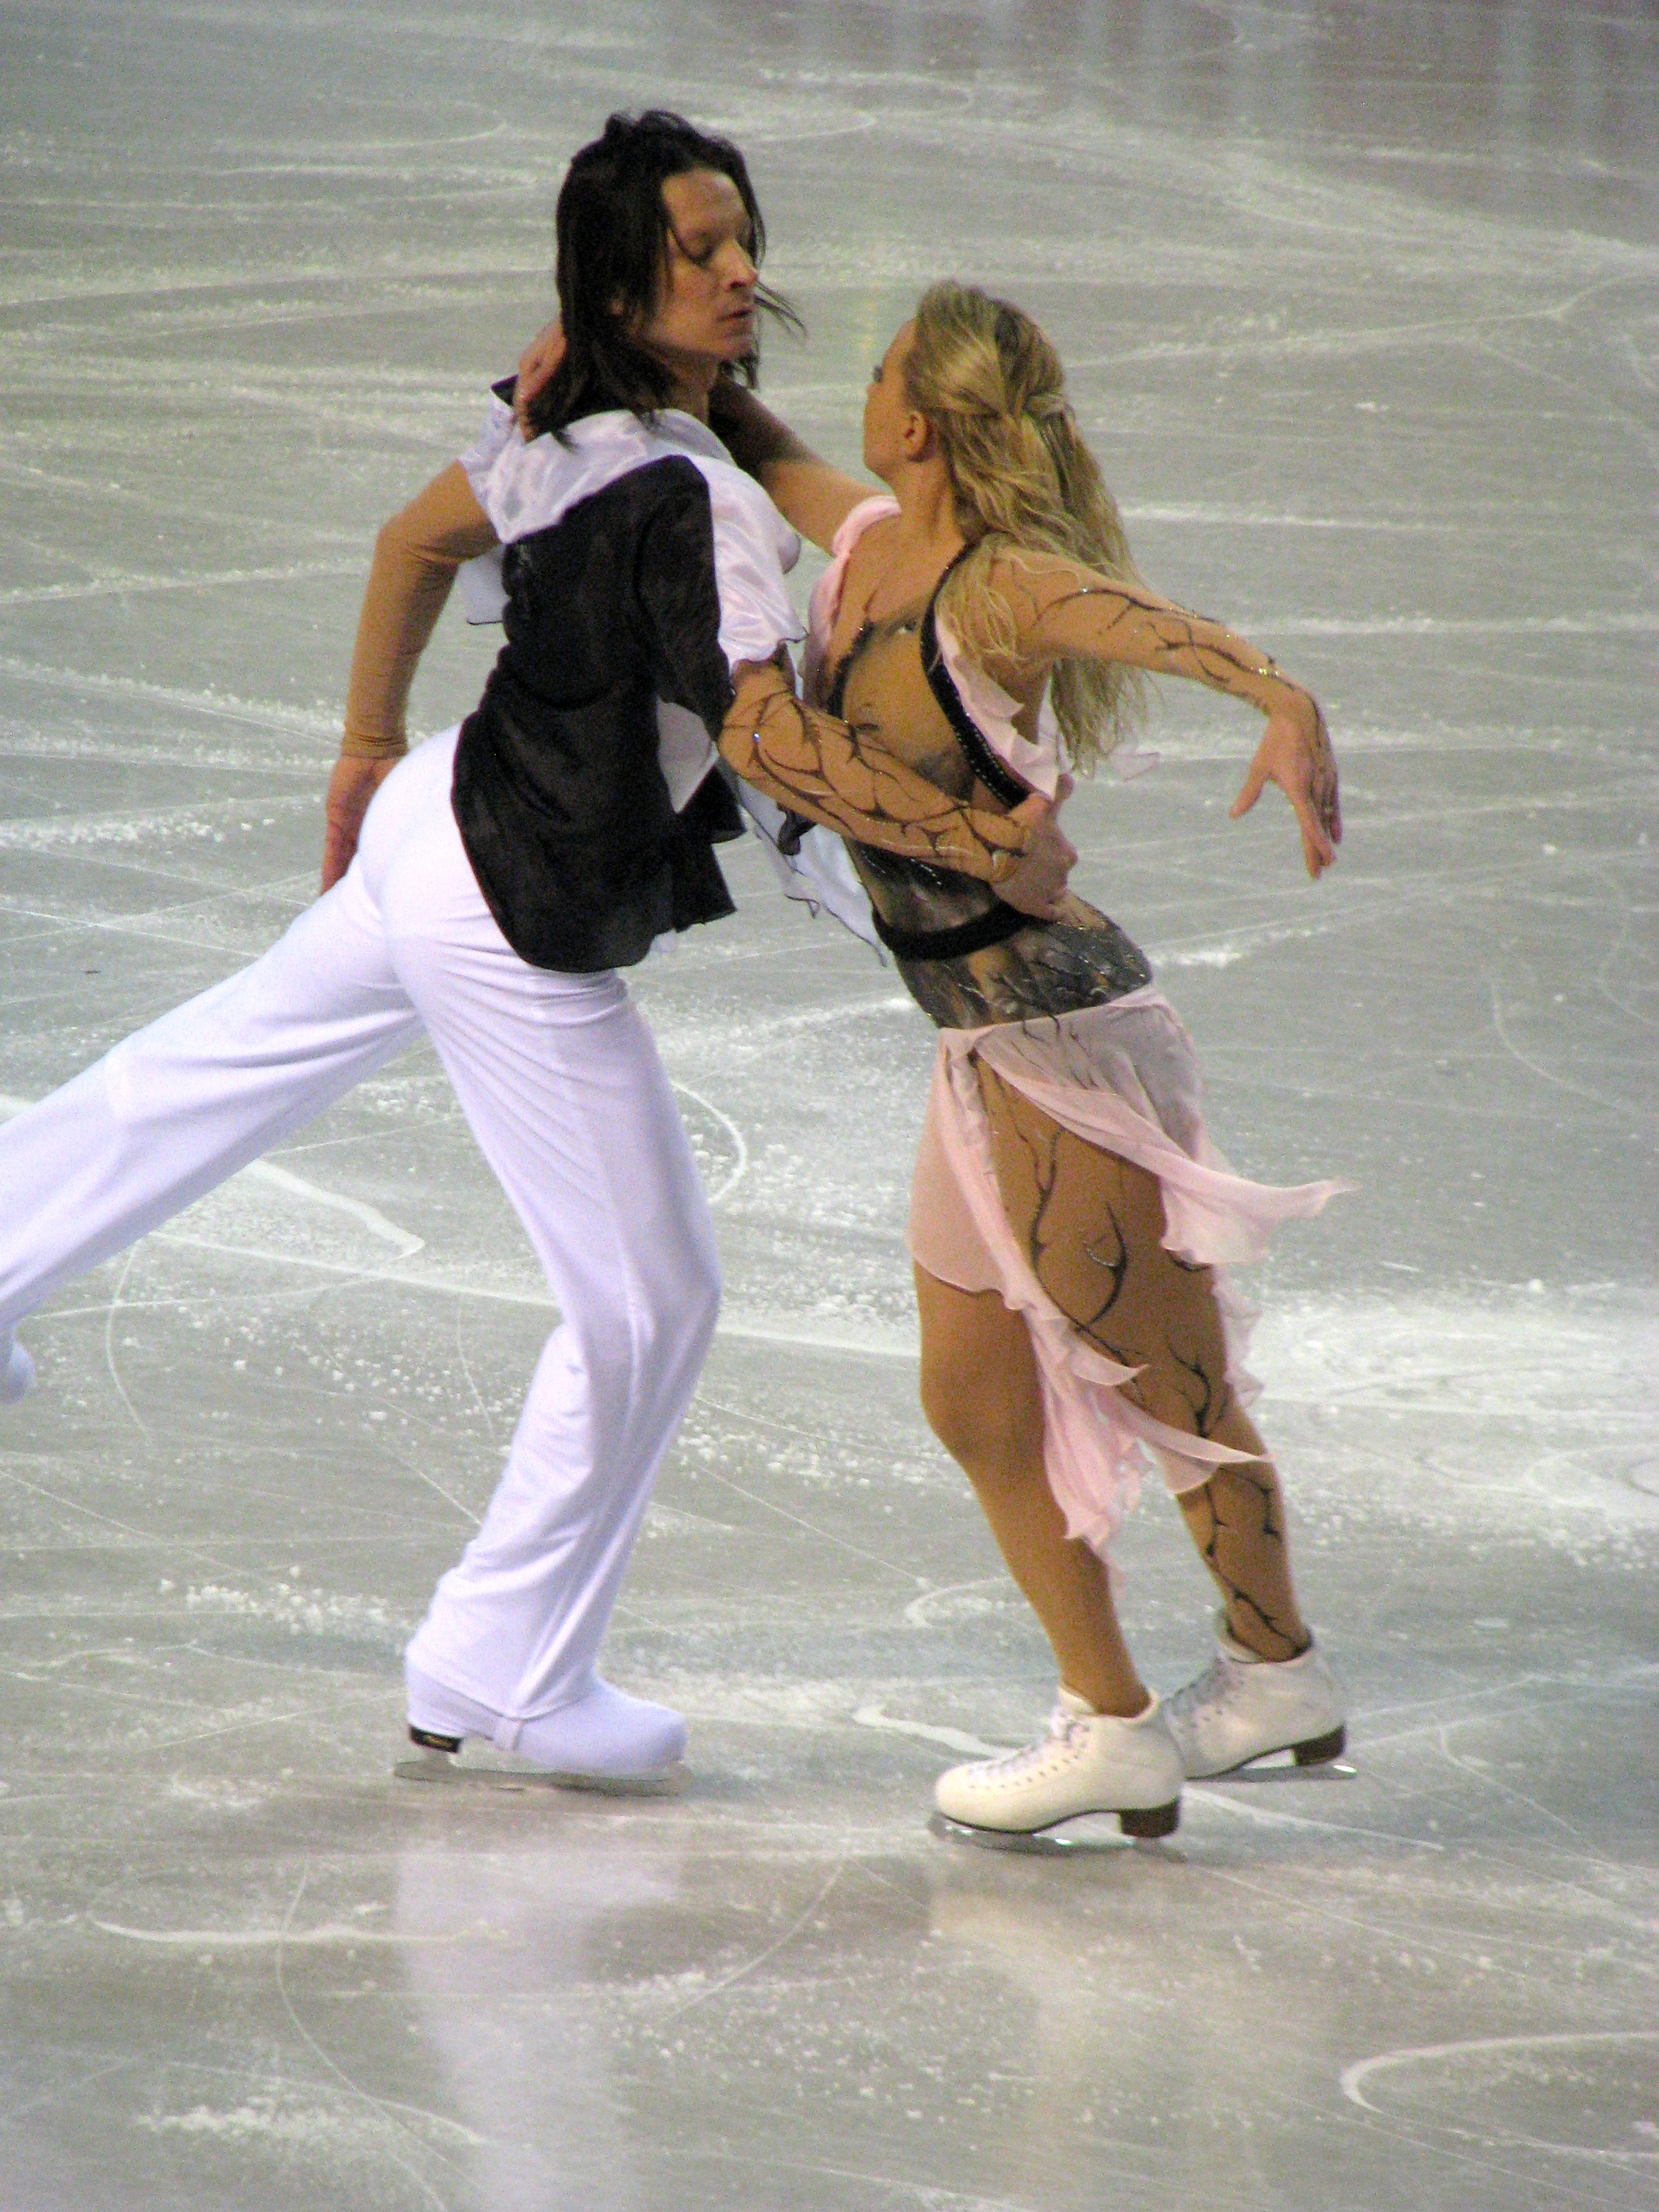 Ice skating photo